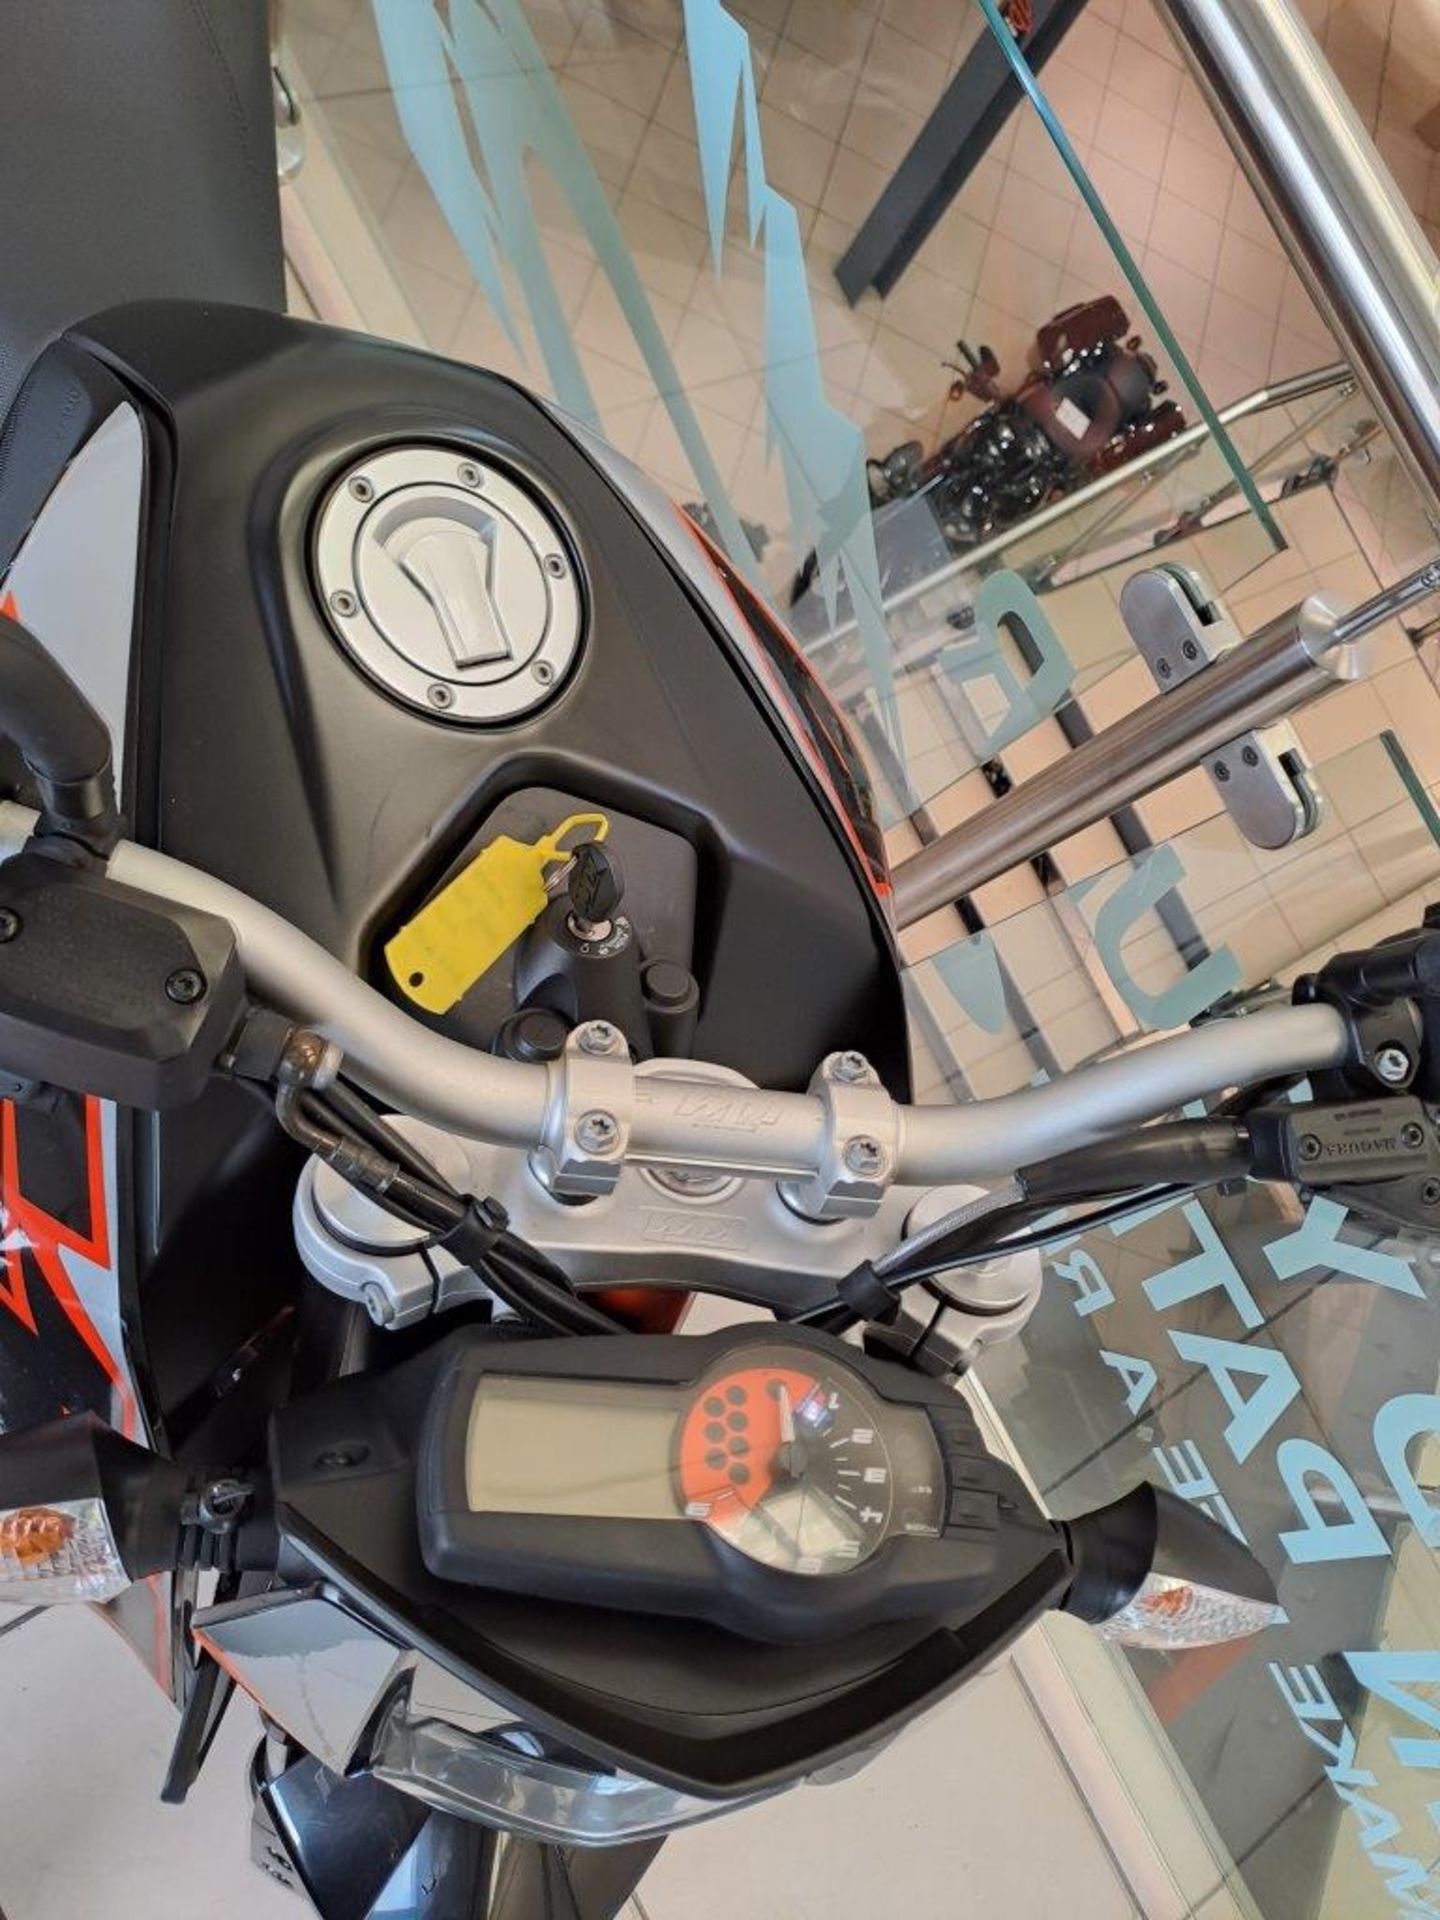 KTM Duke 690 Motorbike (May 2015) - Image 8 of 18